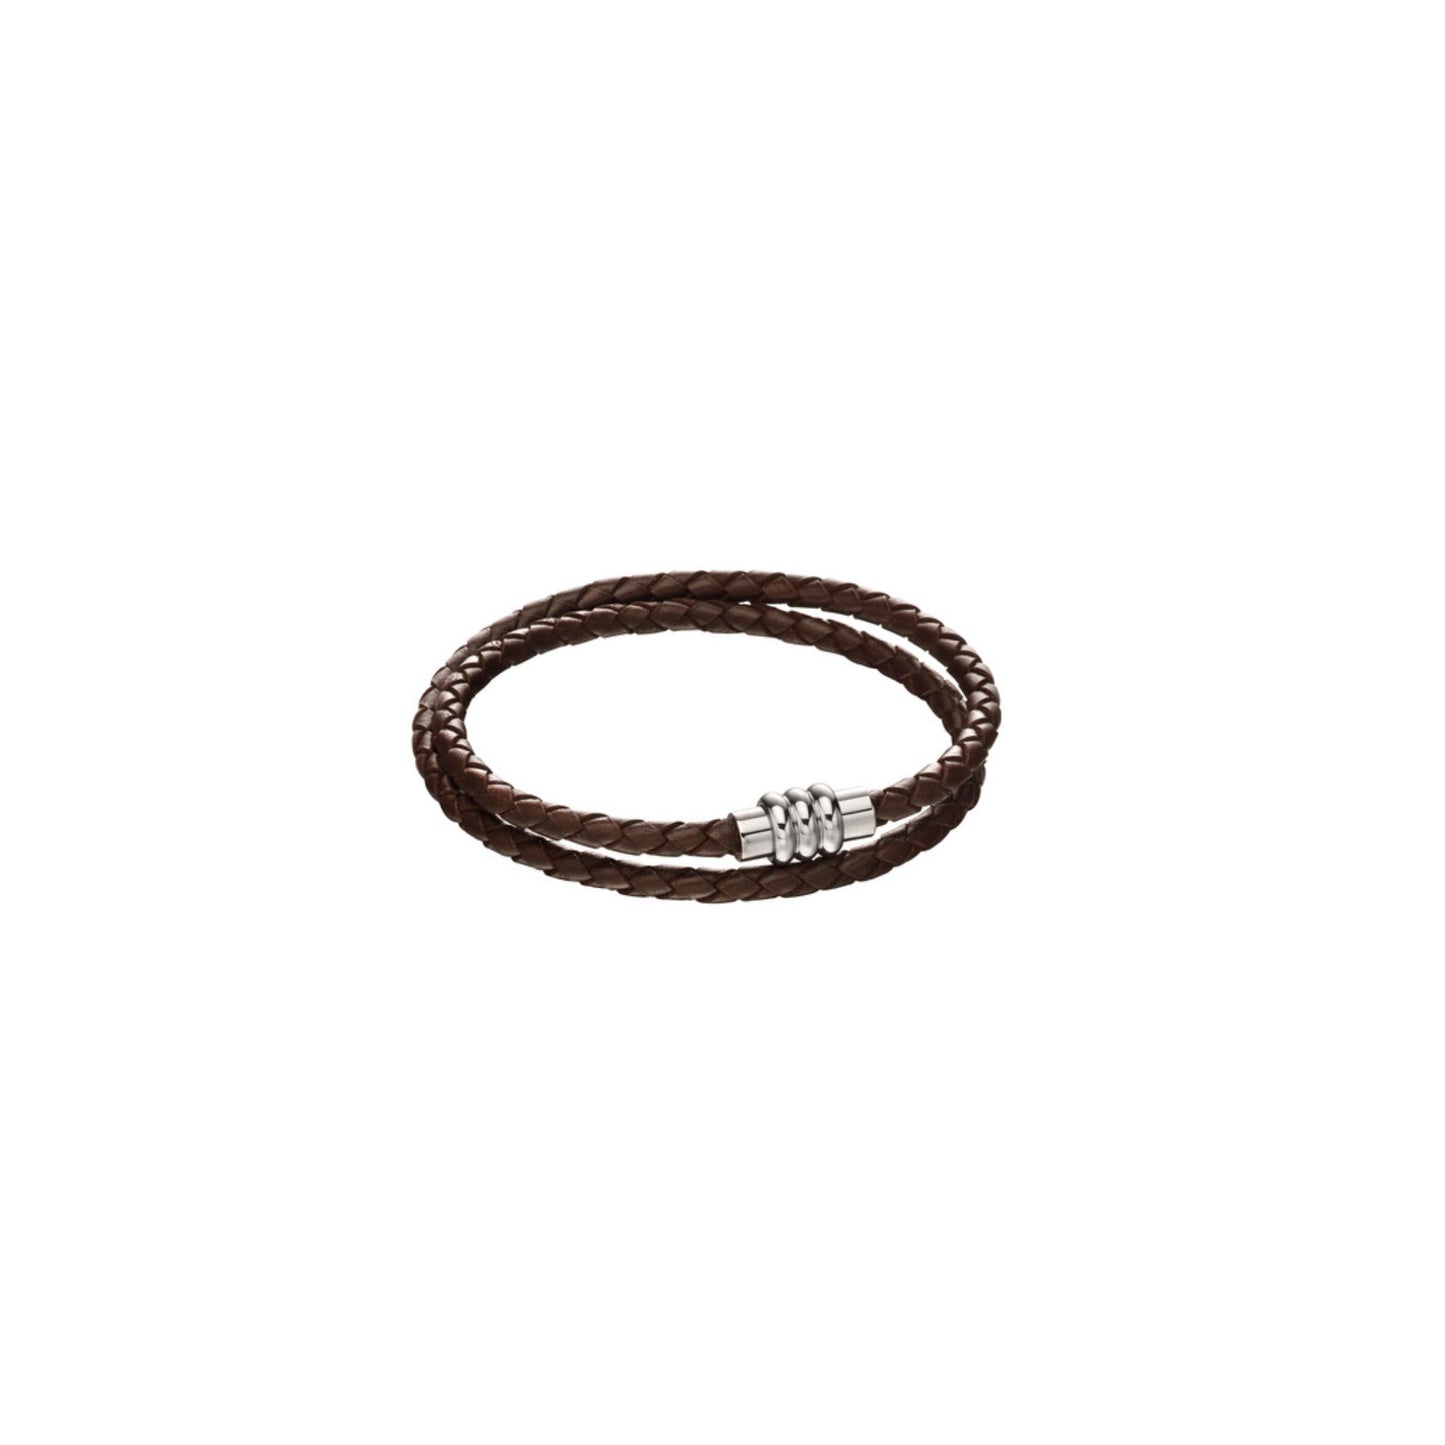 FRED BENNETT - Brown leather double plaited stainless steel bracelet